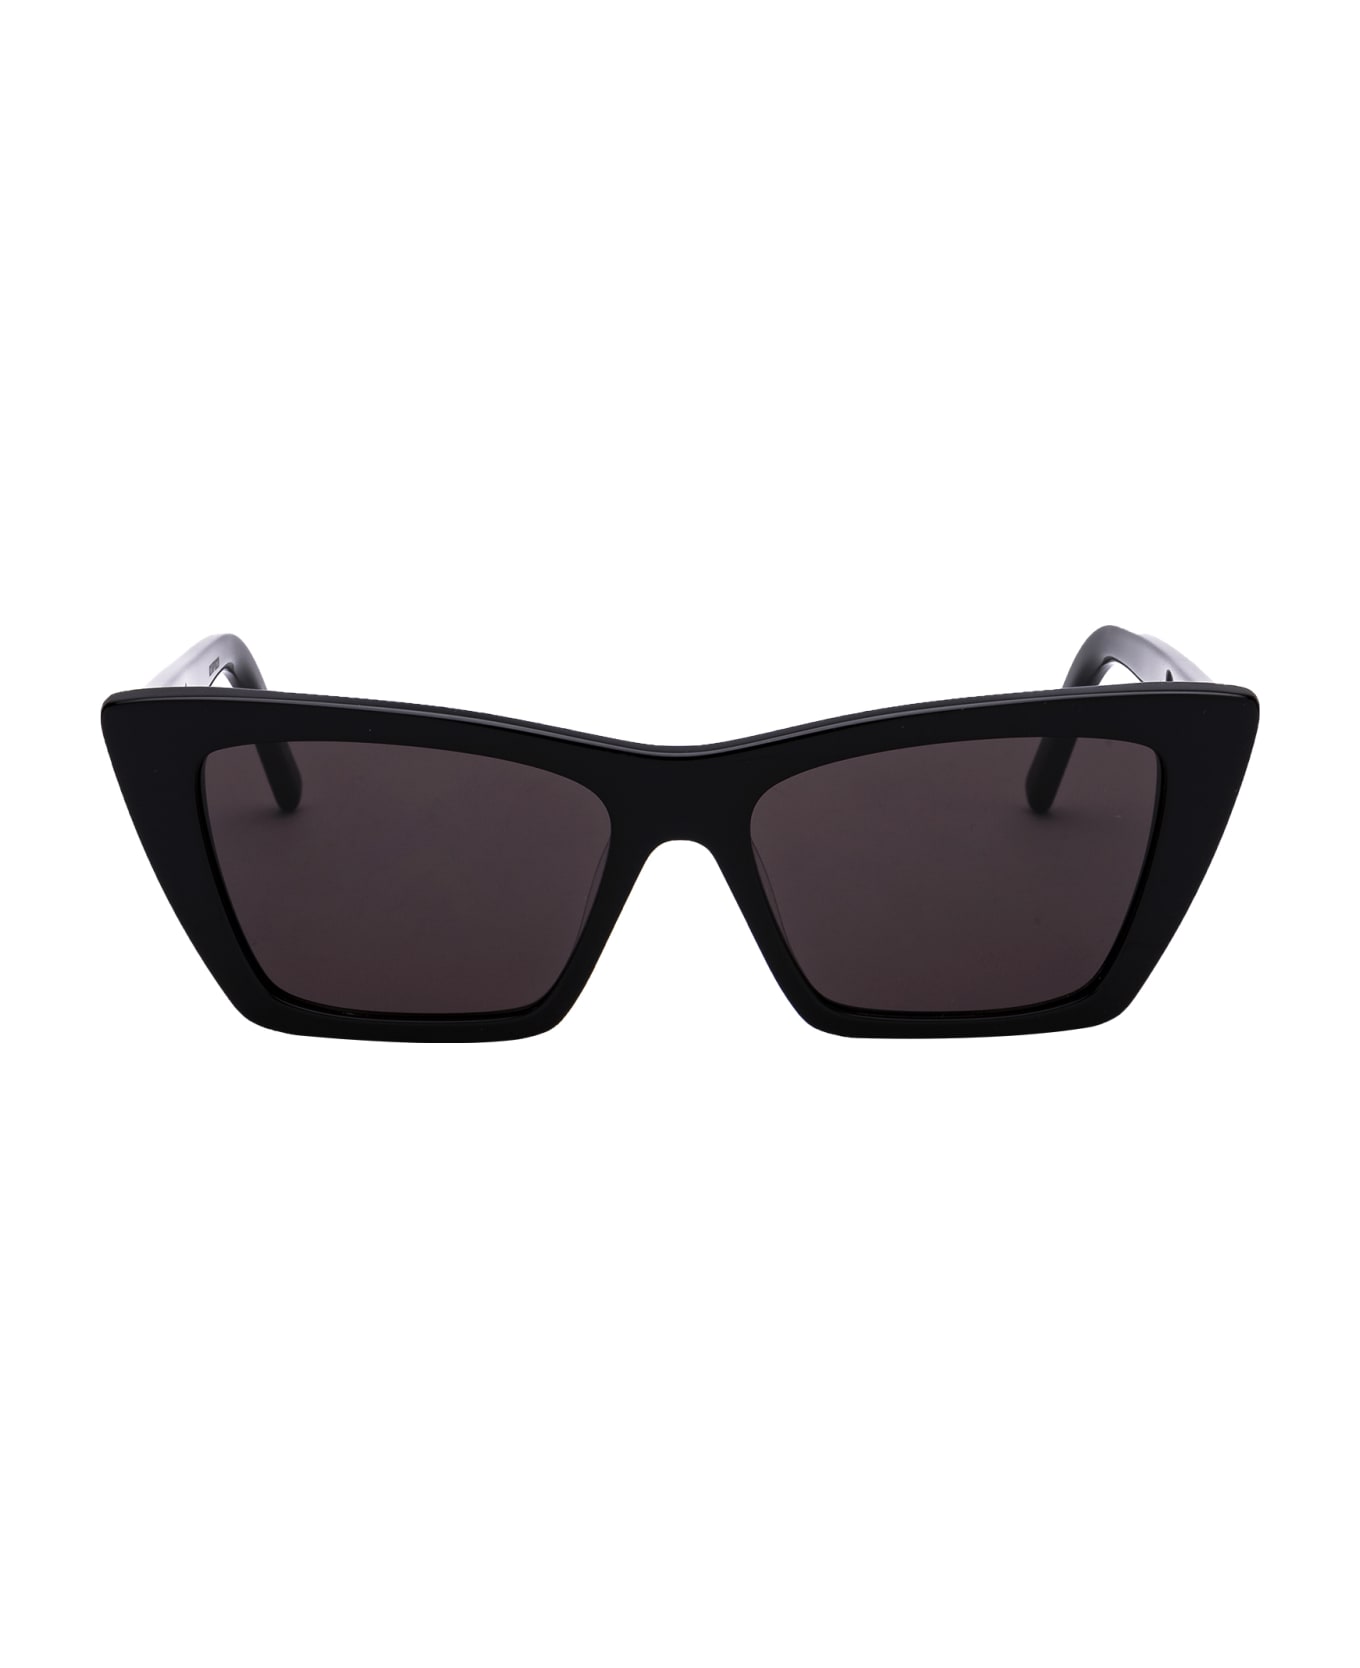 Saint Laurent Eyewear Sl 276 Mica Sunglasses - 001 BLACK BLACK GREY サングラス